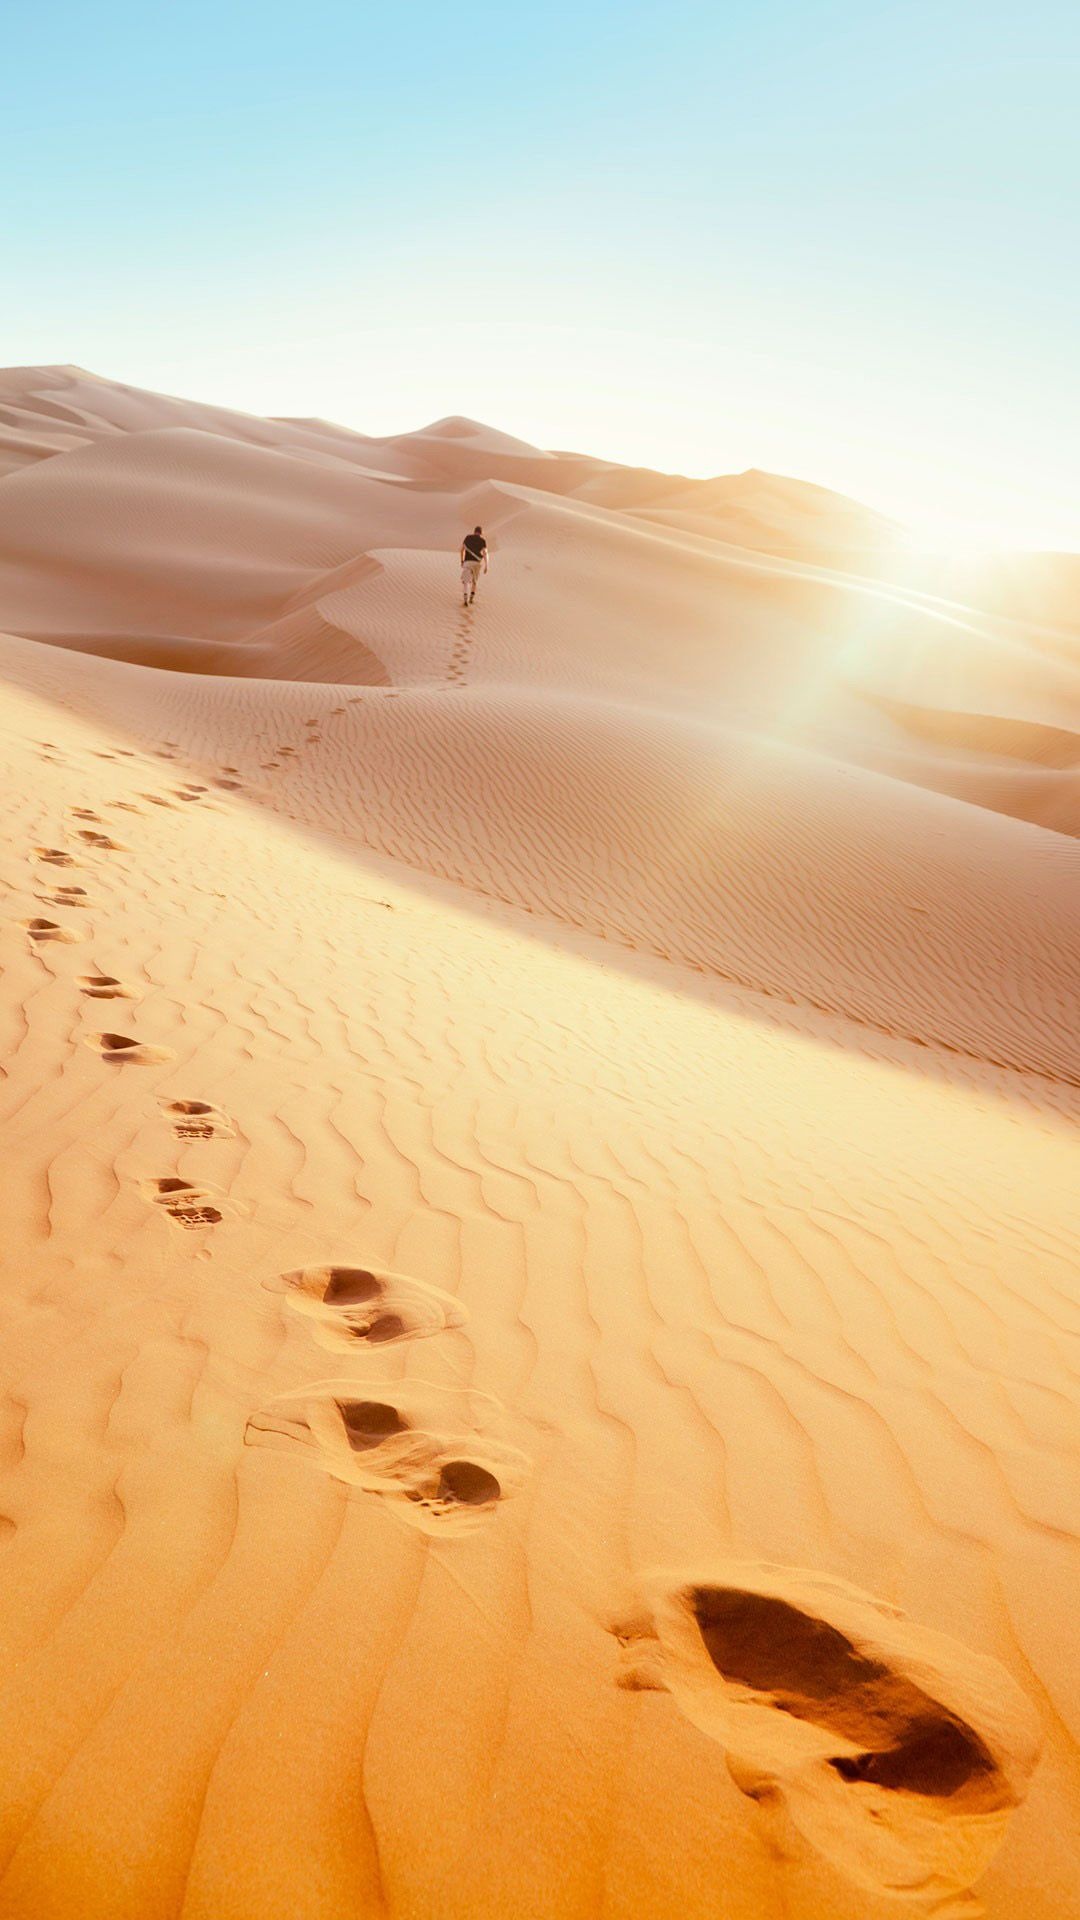 Man footprints, Desert Android wallpaper, Nature iPhone wallpaper, 1080x1920 Full HD Phone